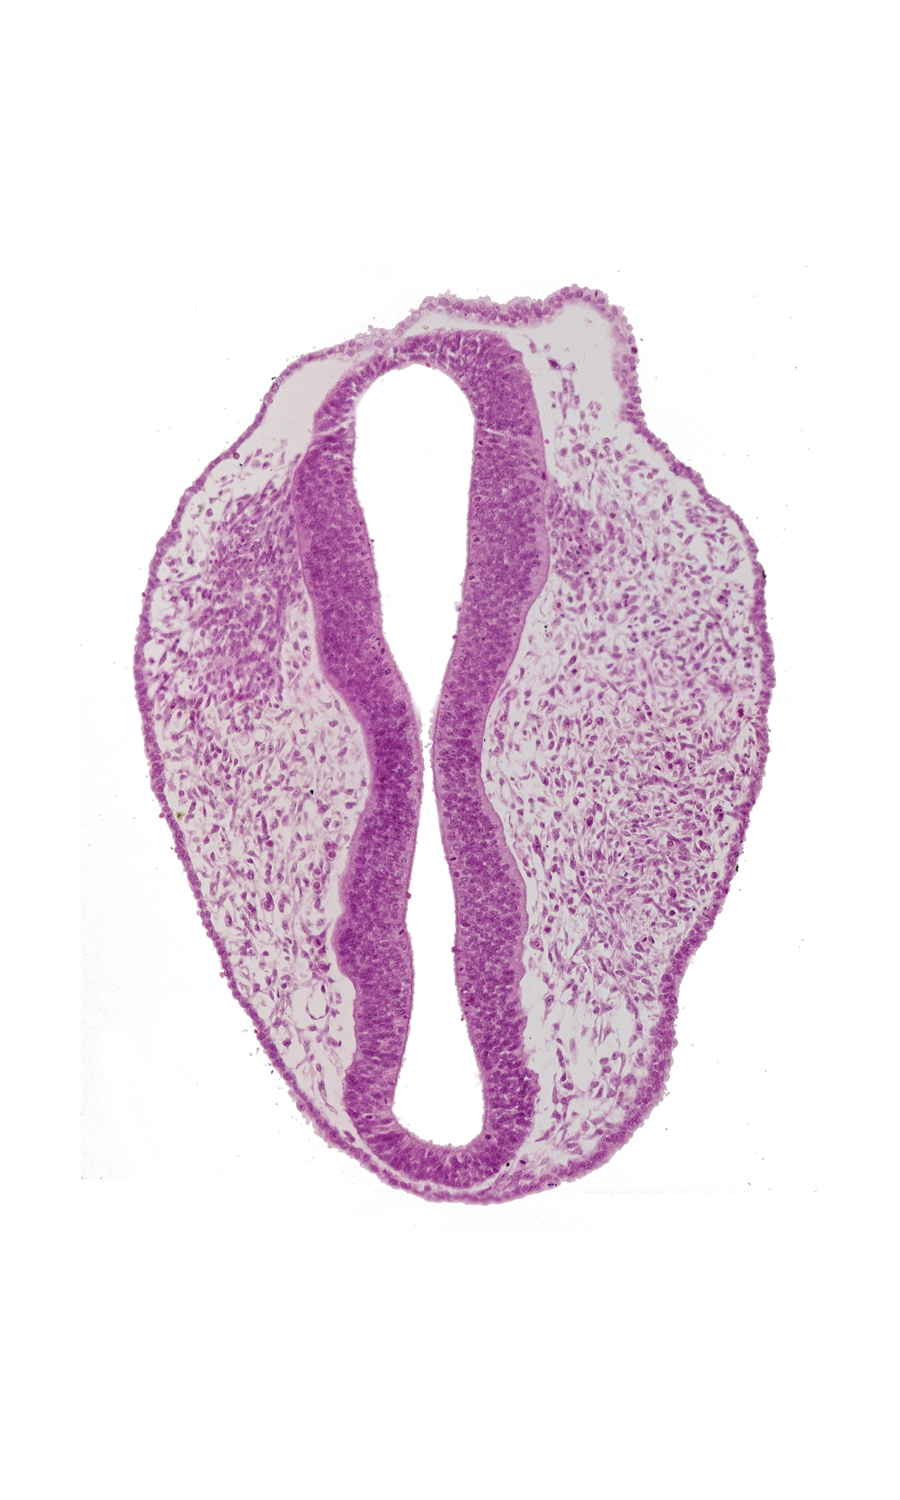 caudal edge of trigeminal neural crest (CN V), diencephalon (D2), mesencephalon (M1), mesencephalon (M2), mesencoel, prosencoel (third ventricle), rhombencephalon (Rh. 1), rhombencephalon (Rh. 2), rhombencoel (fourth ventricle), roof plate